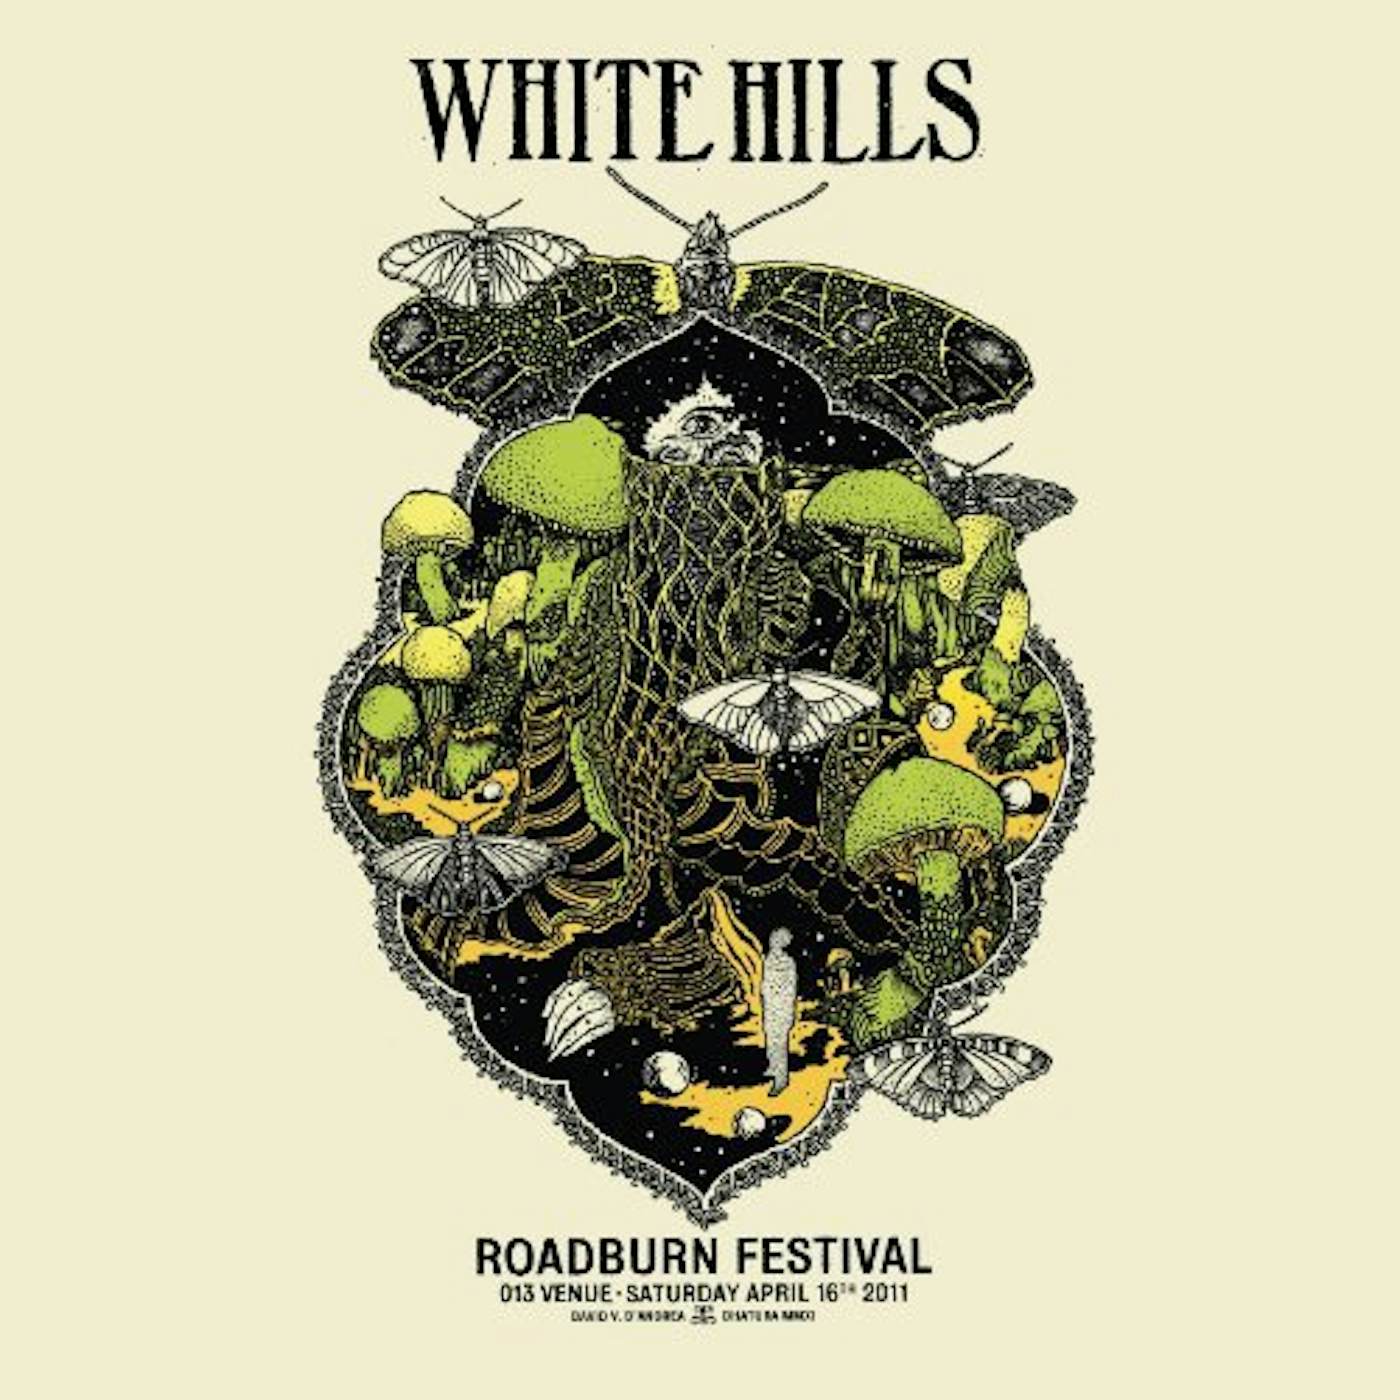 White Hills Live At Roadburn 2011 Vinyl Record